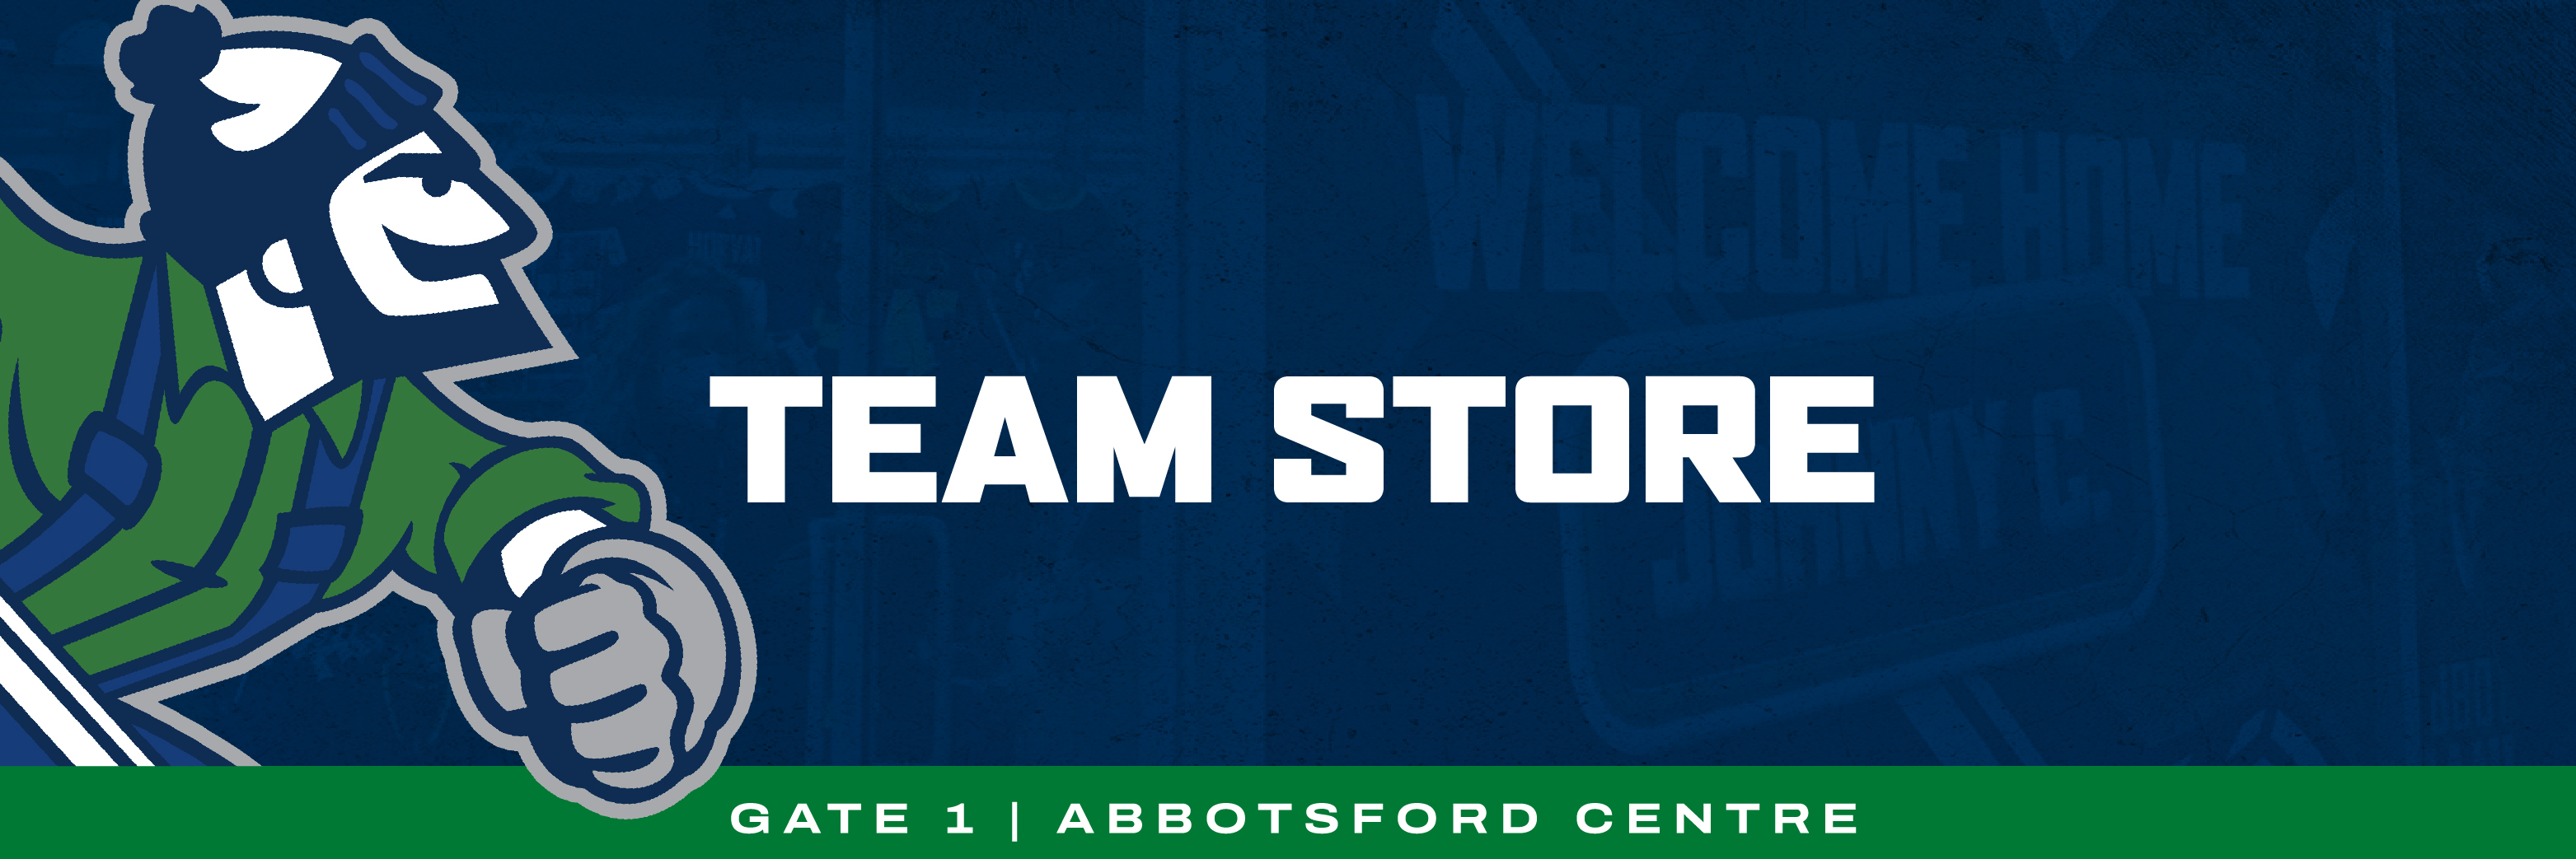 Team Store Abbotsford Canucks